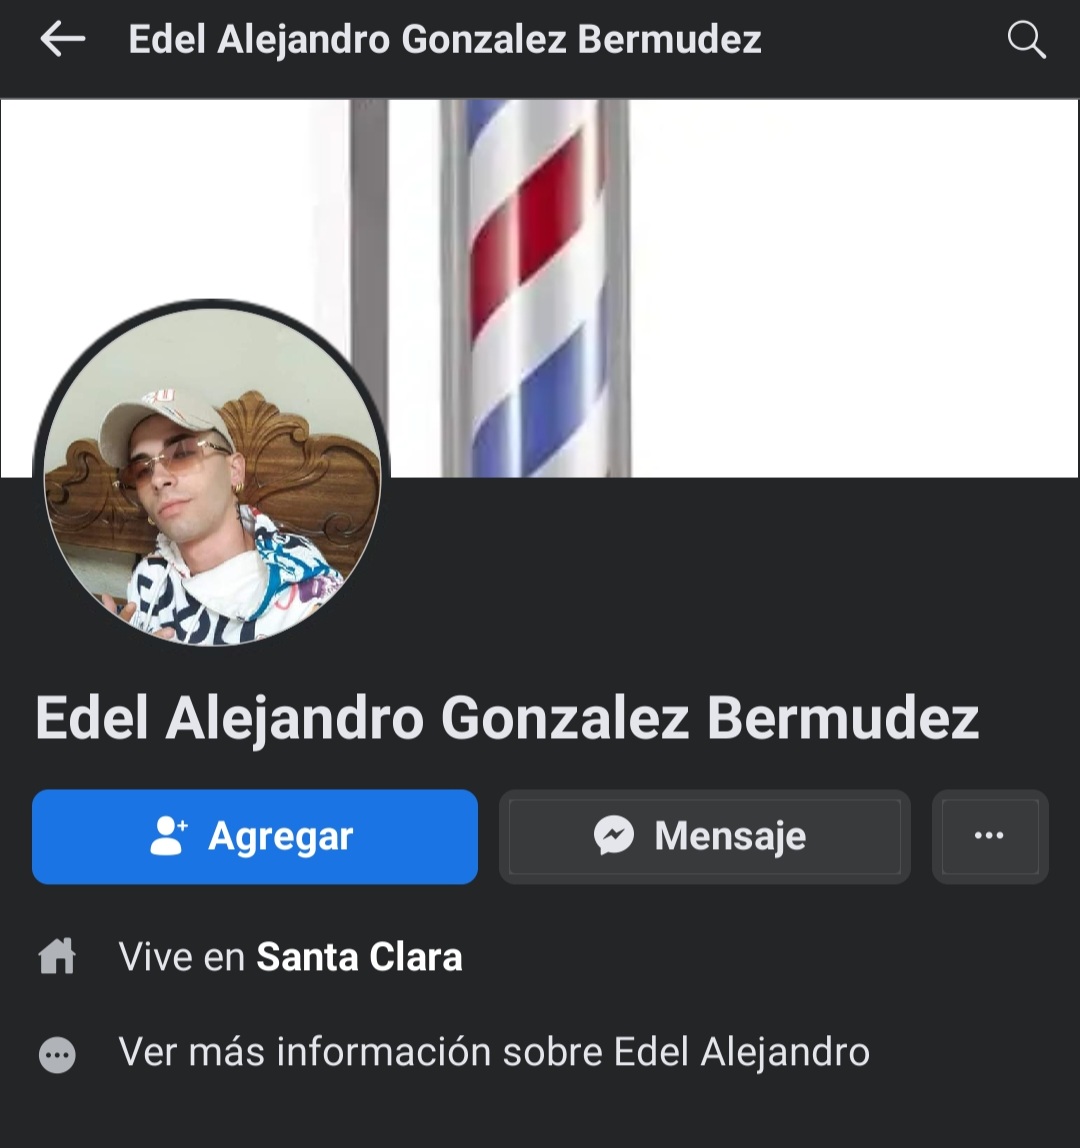 Edel Alejandro Gonzalez Bermudez